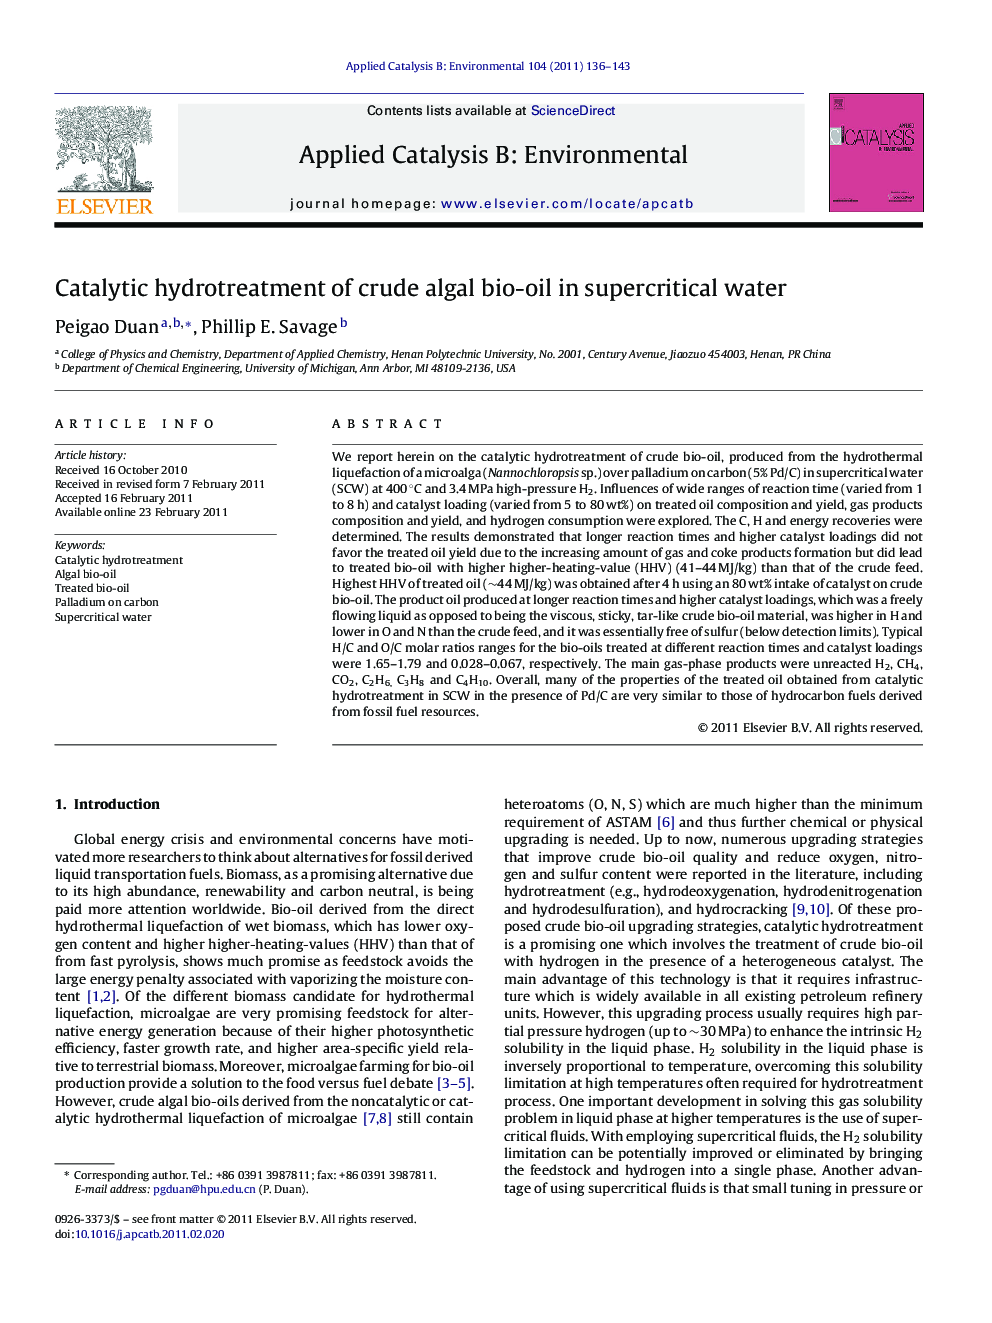 Catalytic hydrotreatment of crude algal bio-oil in supercritical water